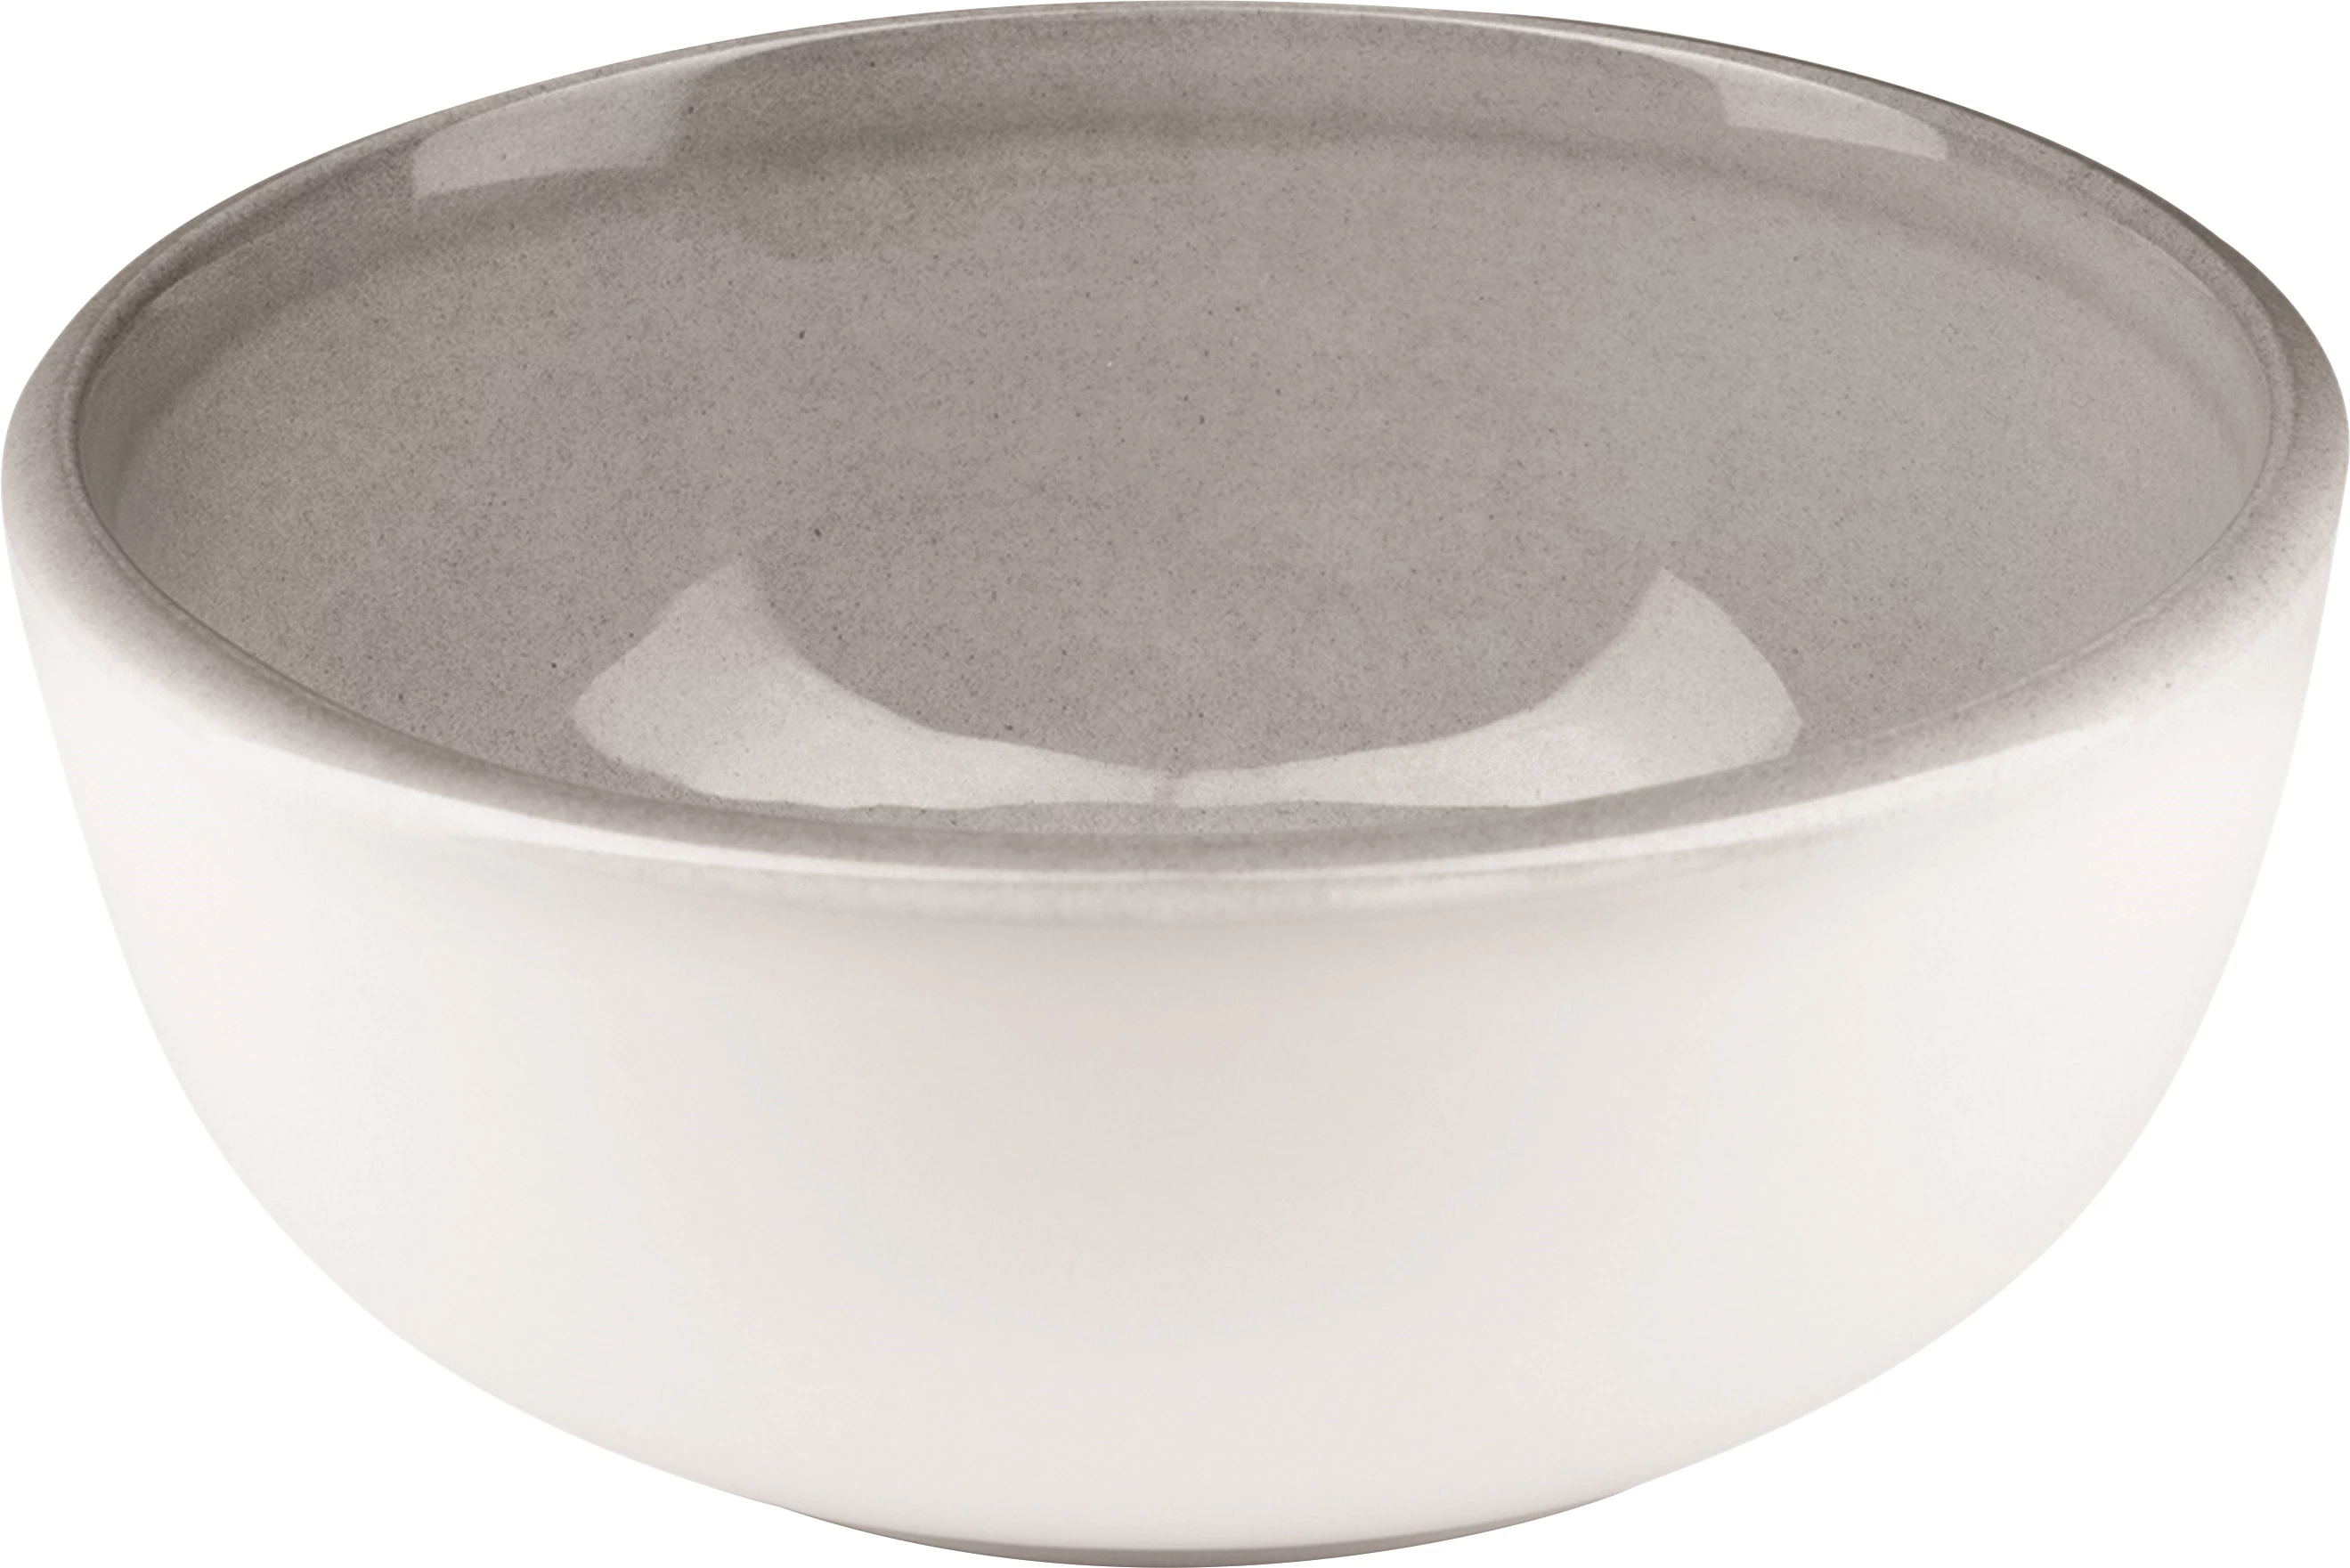 Figgjo Pax skål, grå, 50 cl, ø14 cm